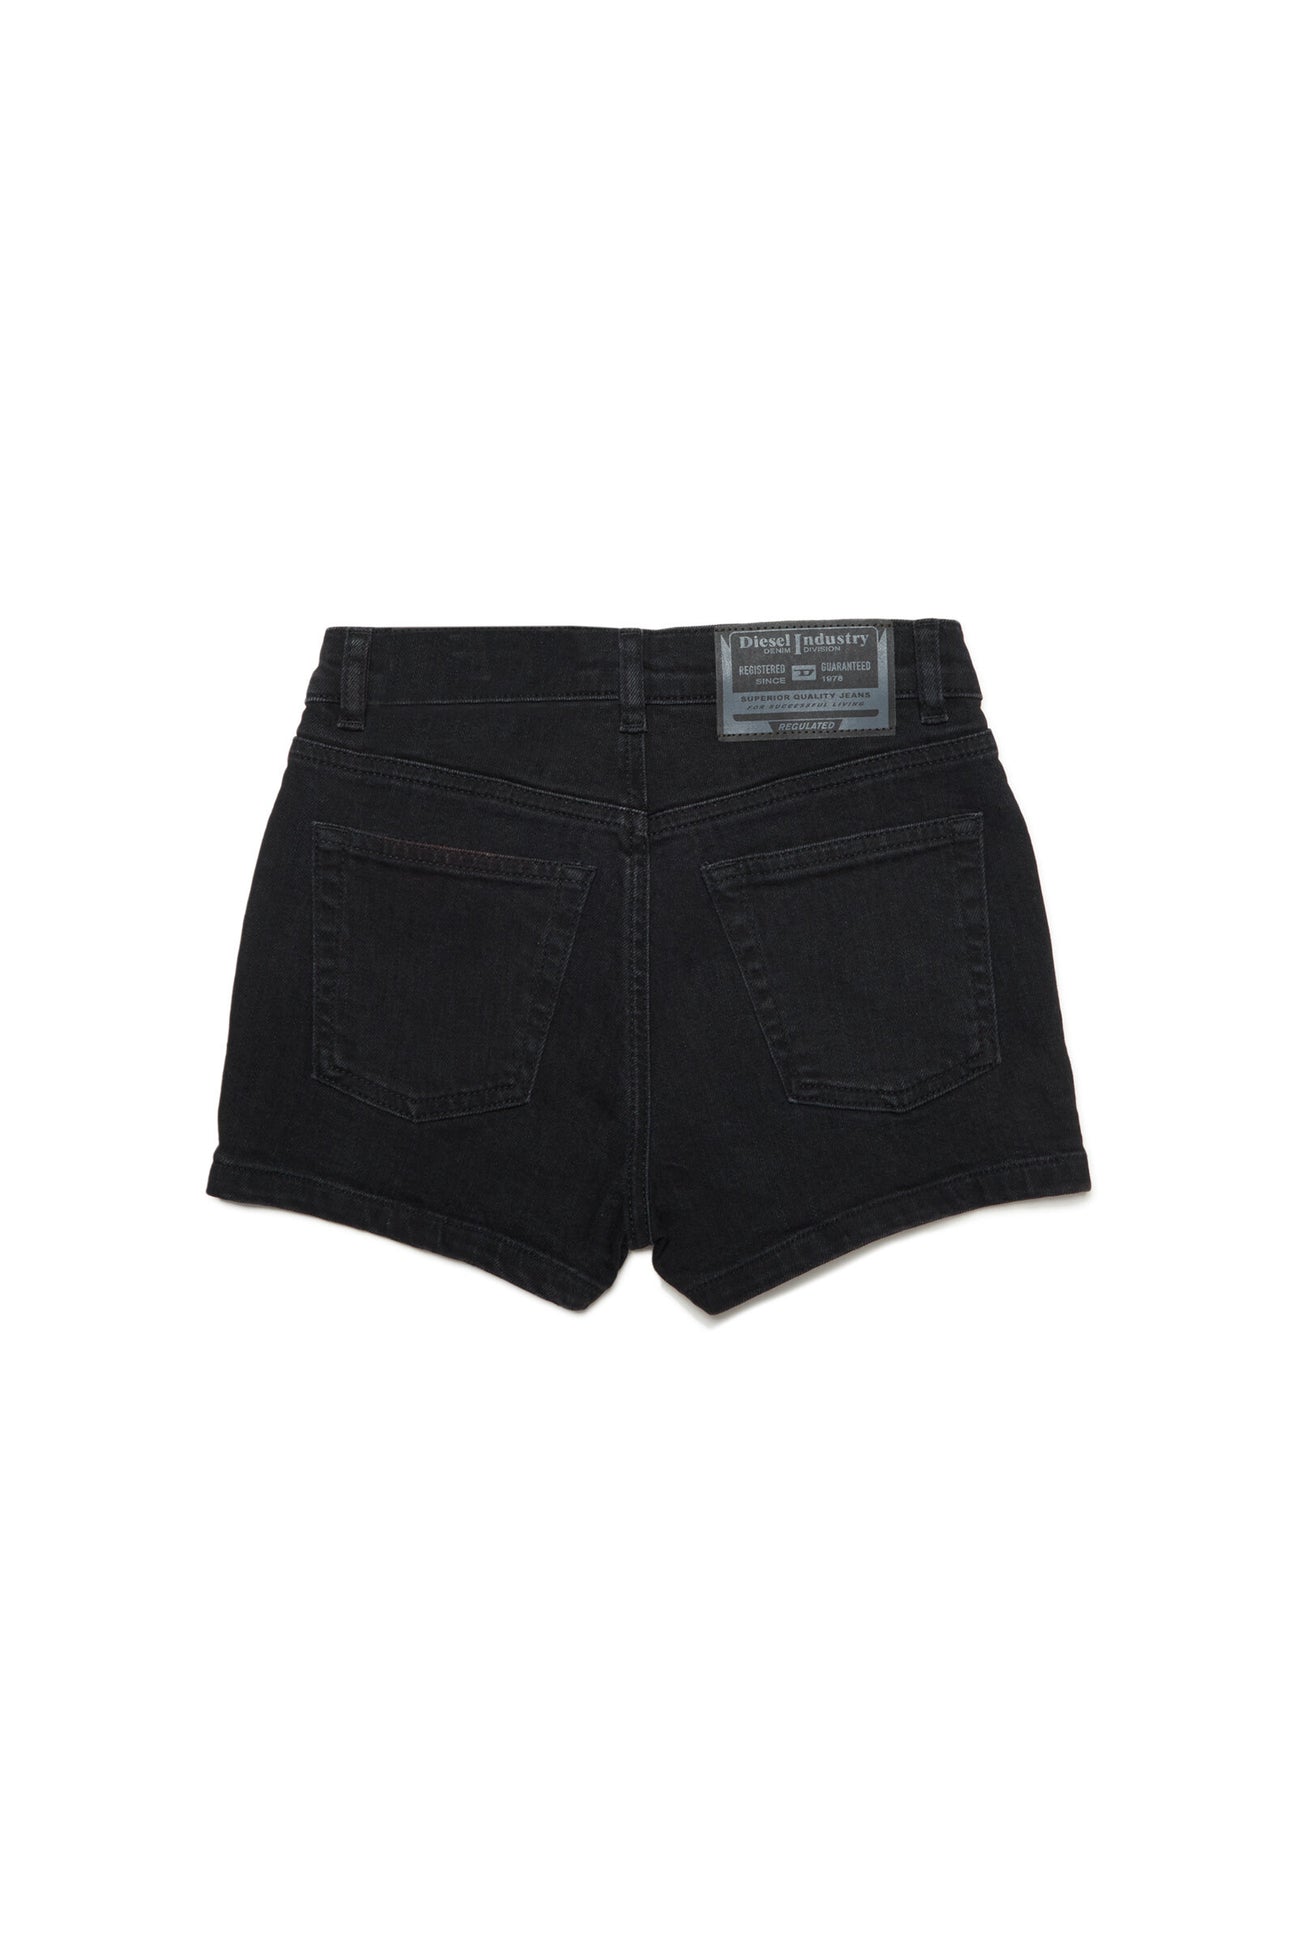 Black denim shorts with 5 pockets pattern Black denim shorts with 5 pockets pattern